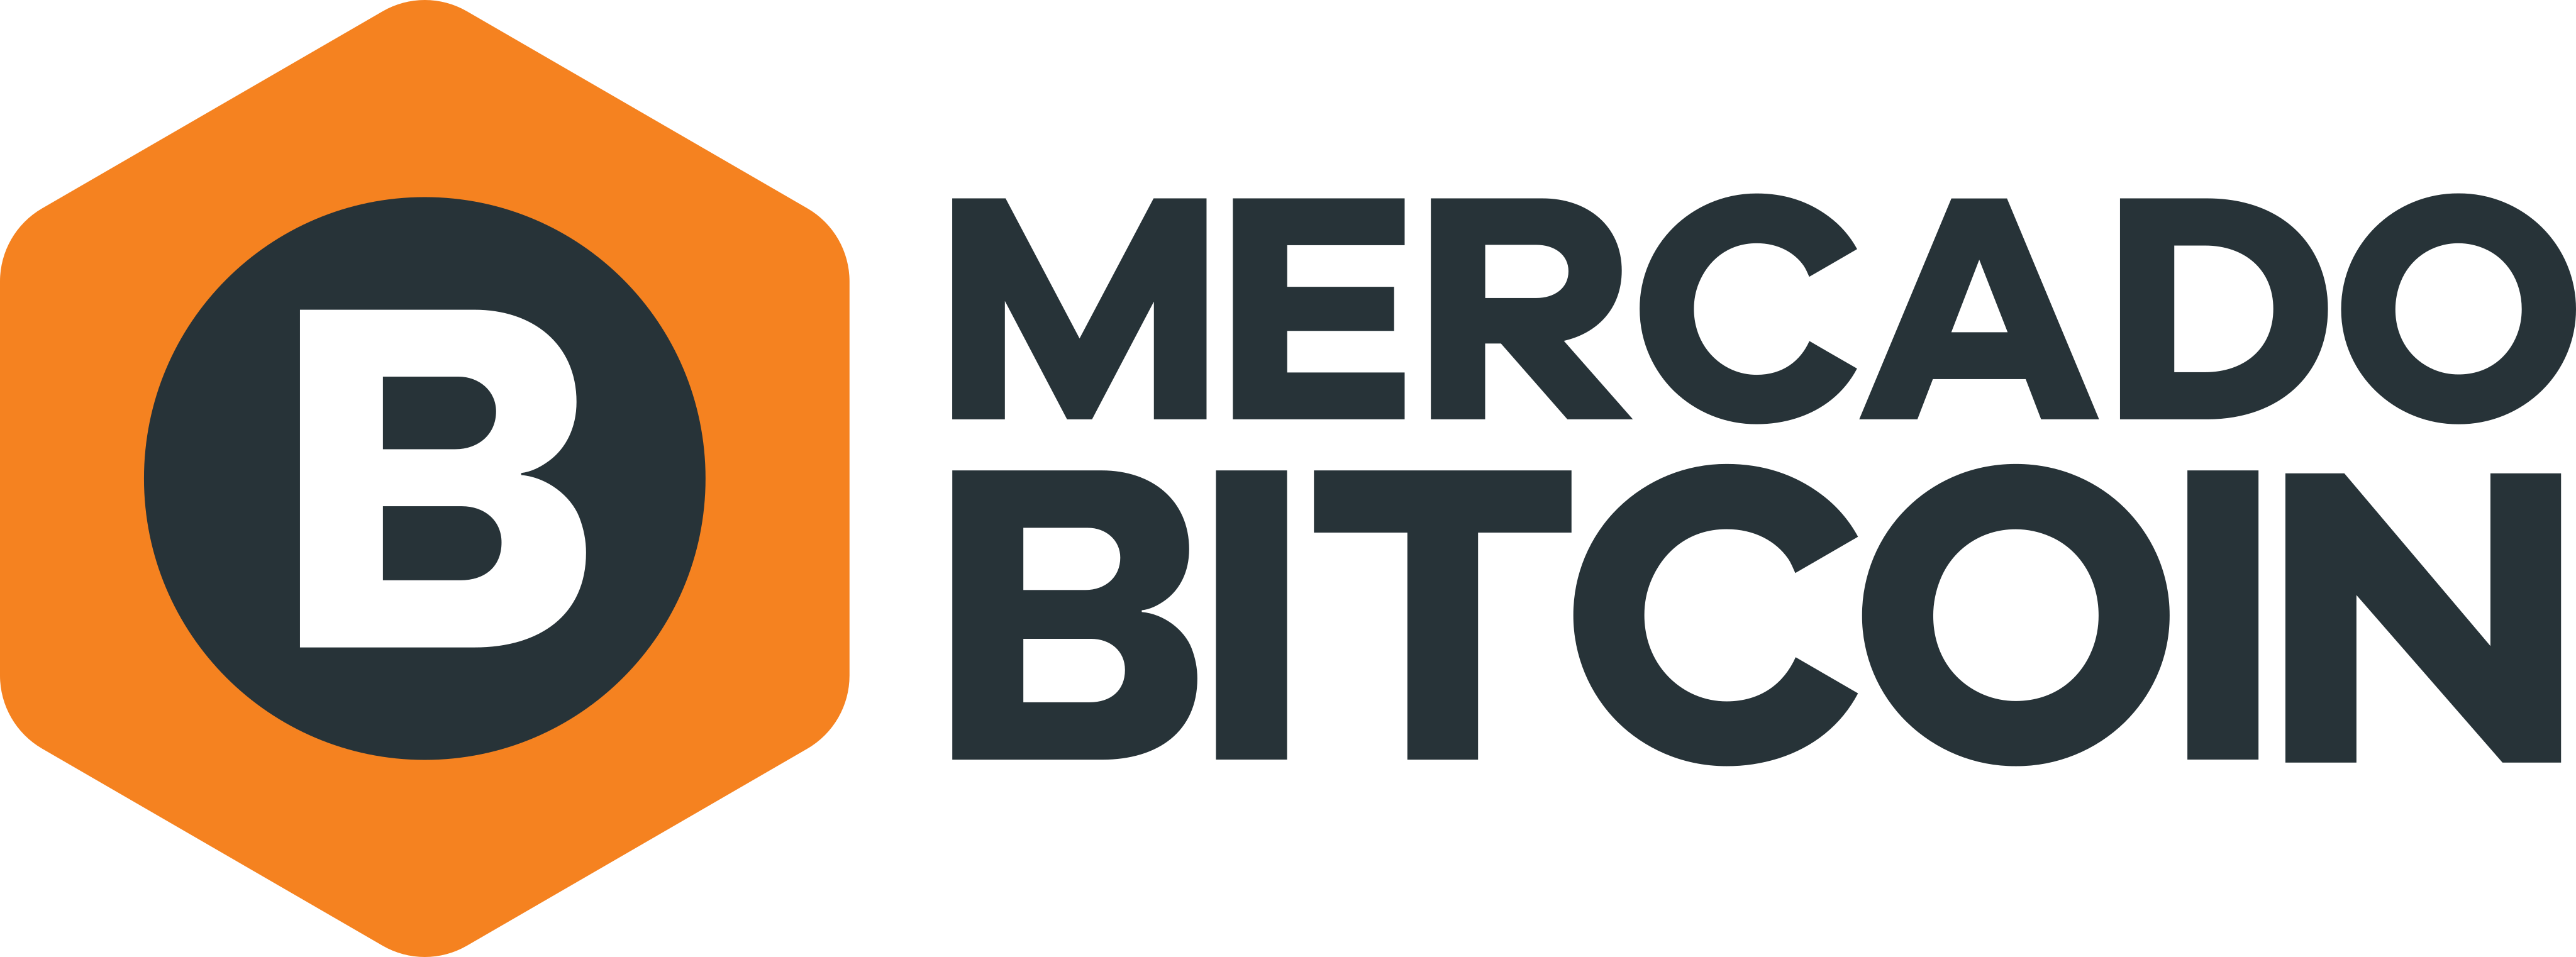 Mercado bitcoin login crypto conference may